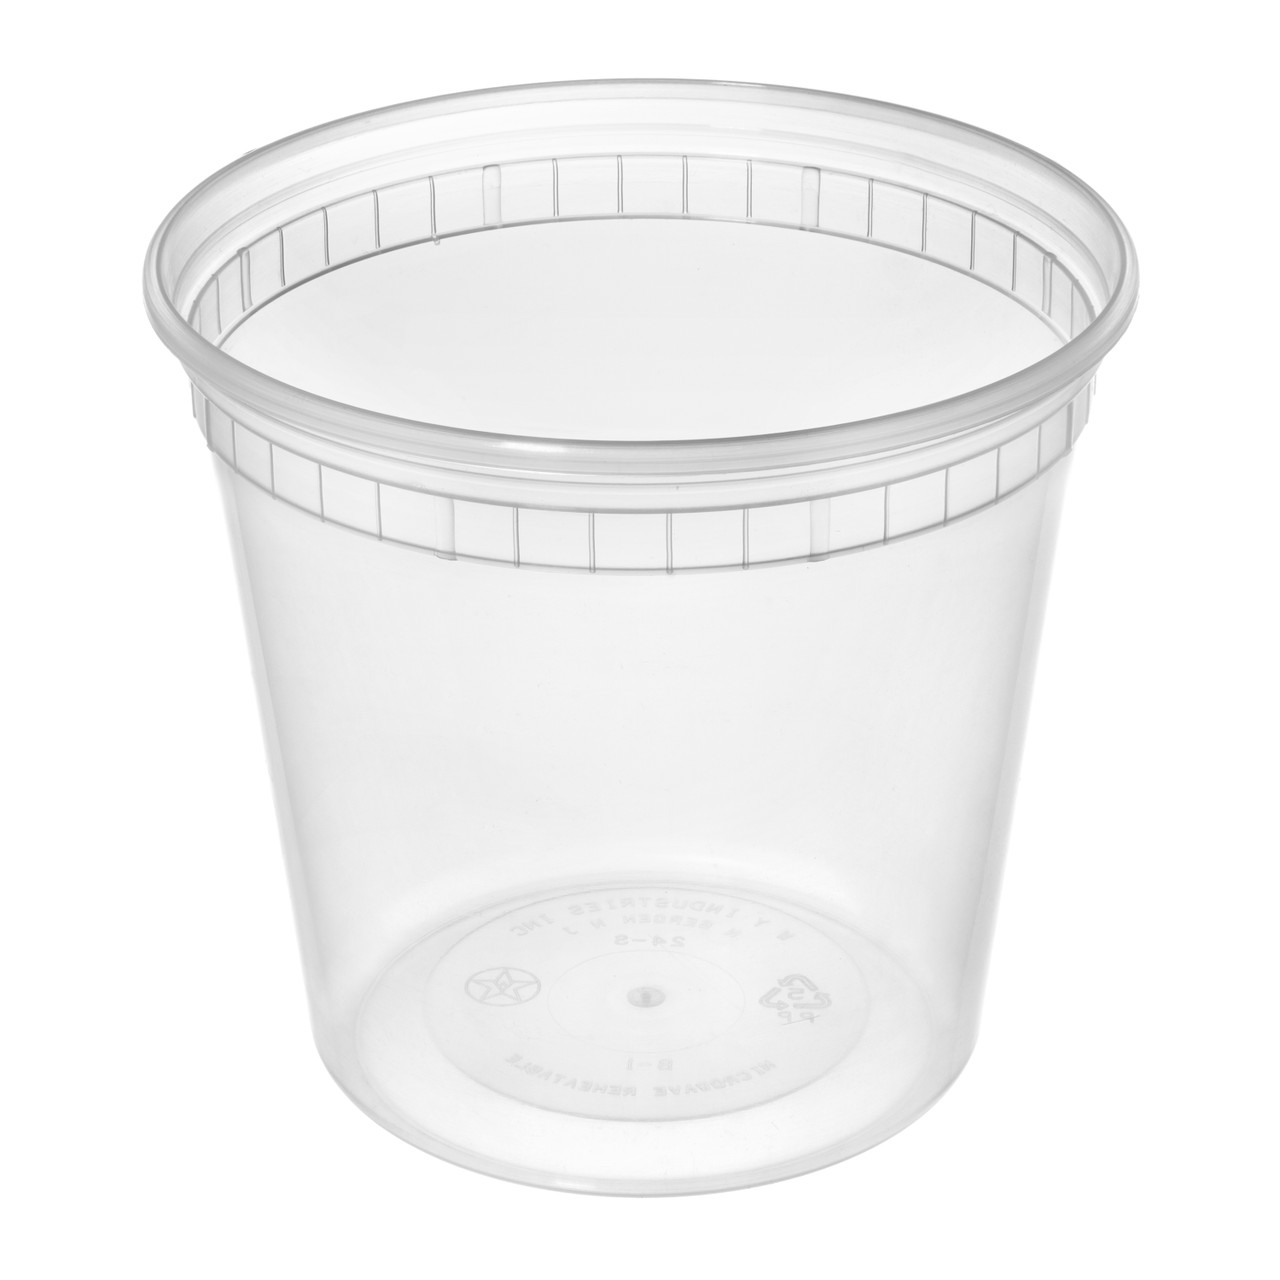 Yocup Company: Plastic Deli Containers 1.5 oz - 2500/case (25x100)